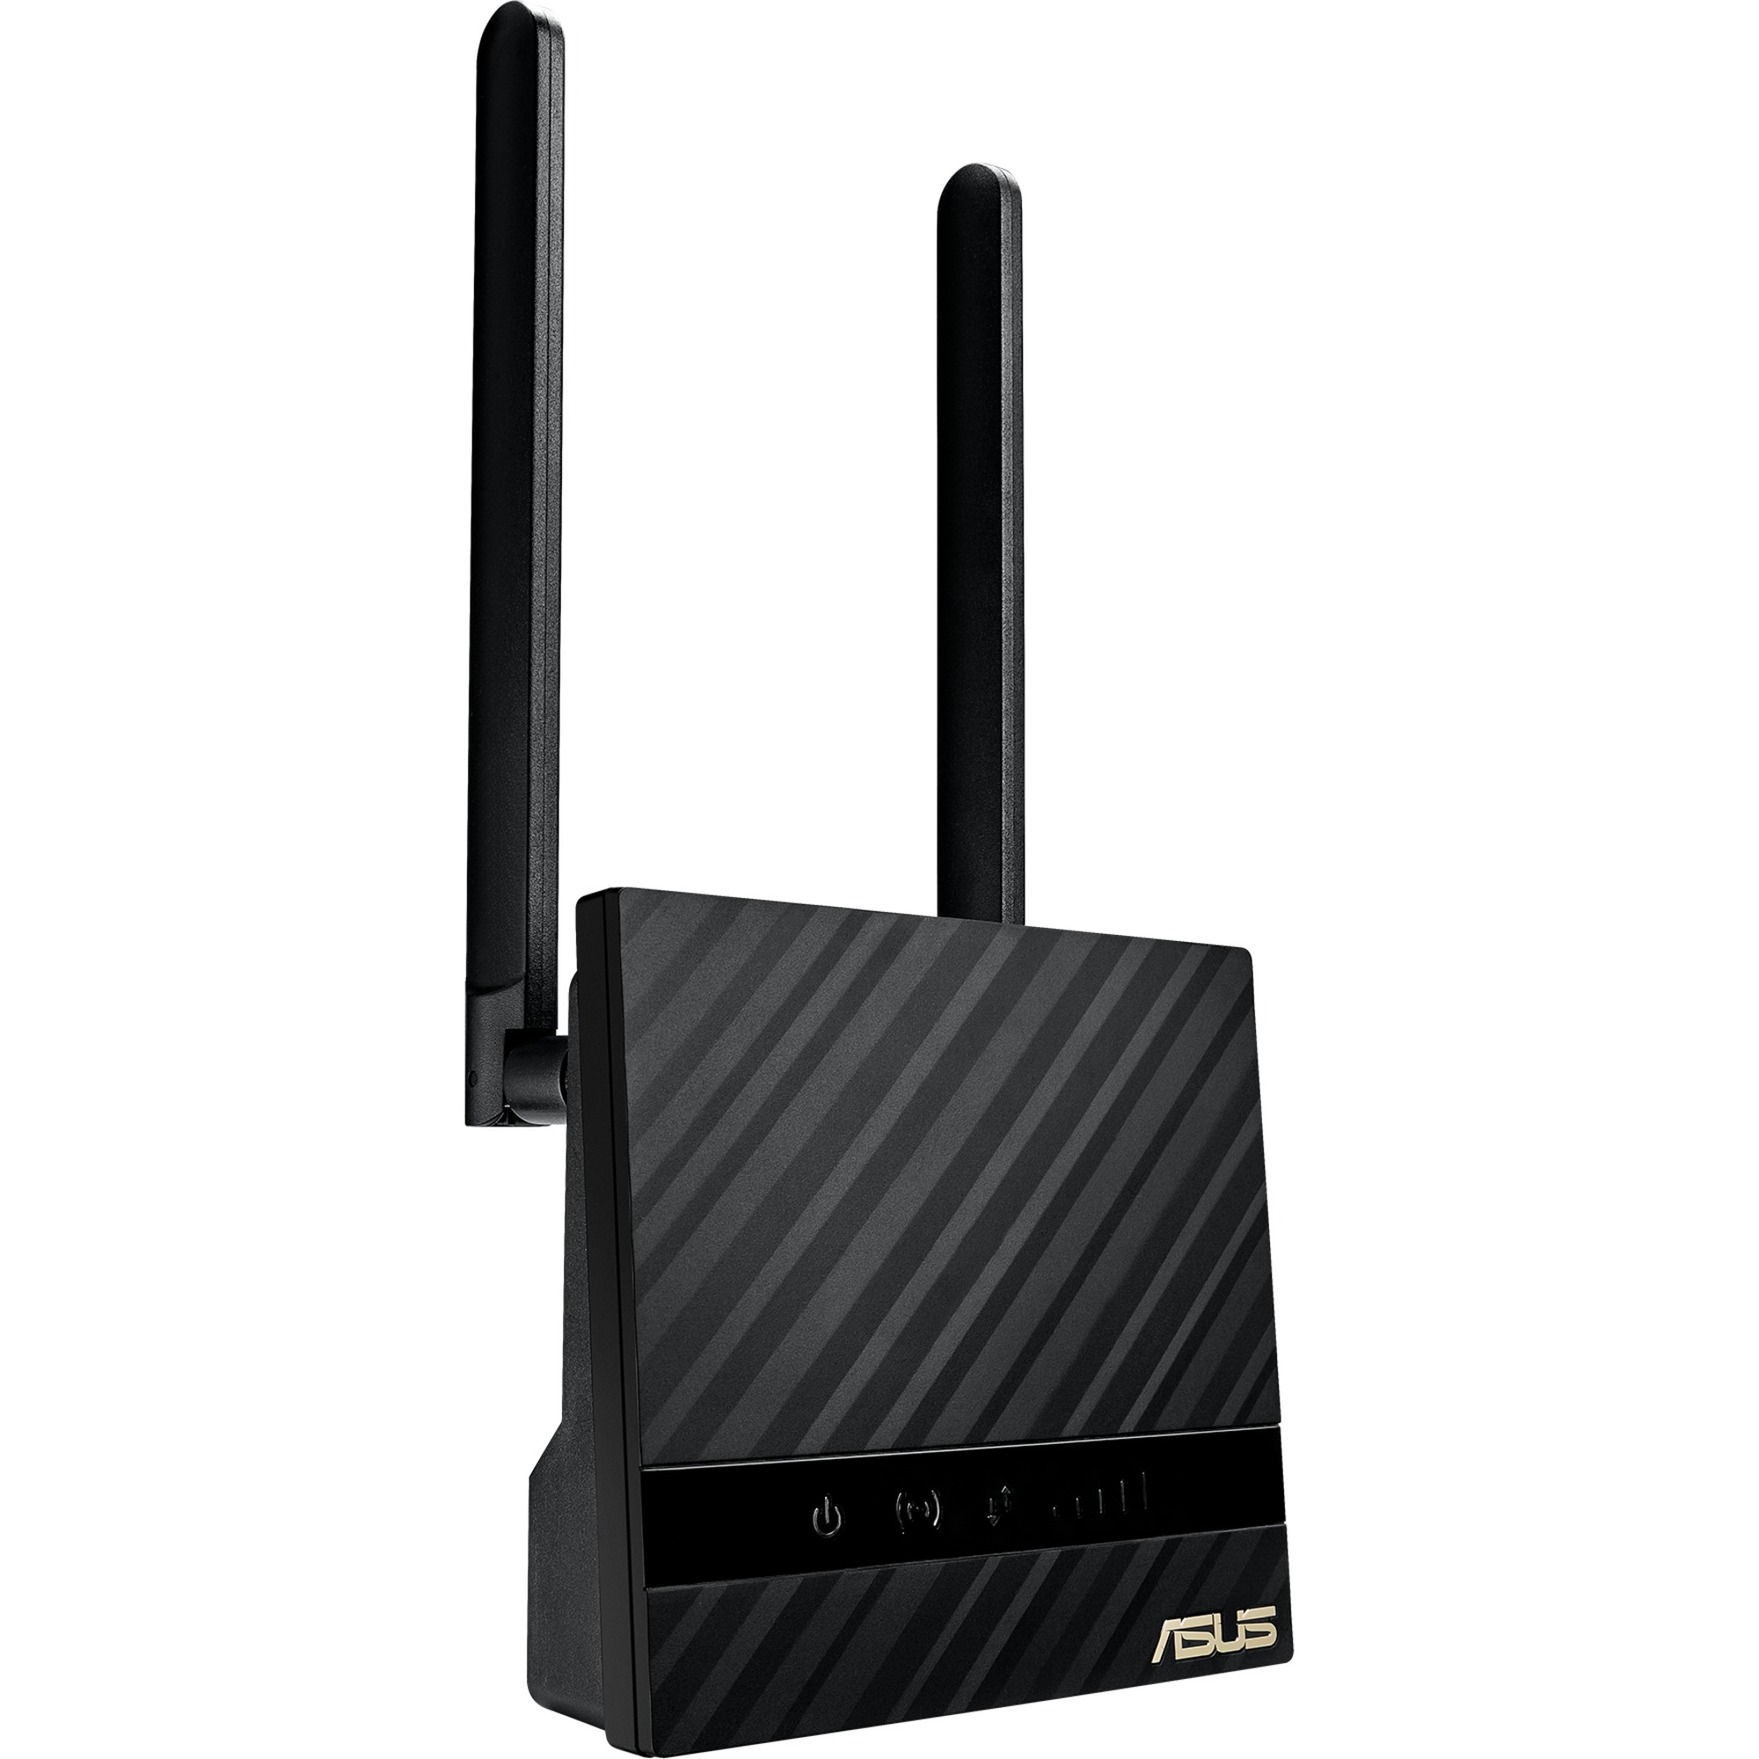 4G-N16 N300, Mobile WLAN-Router von Asus